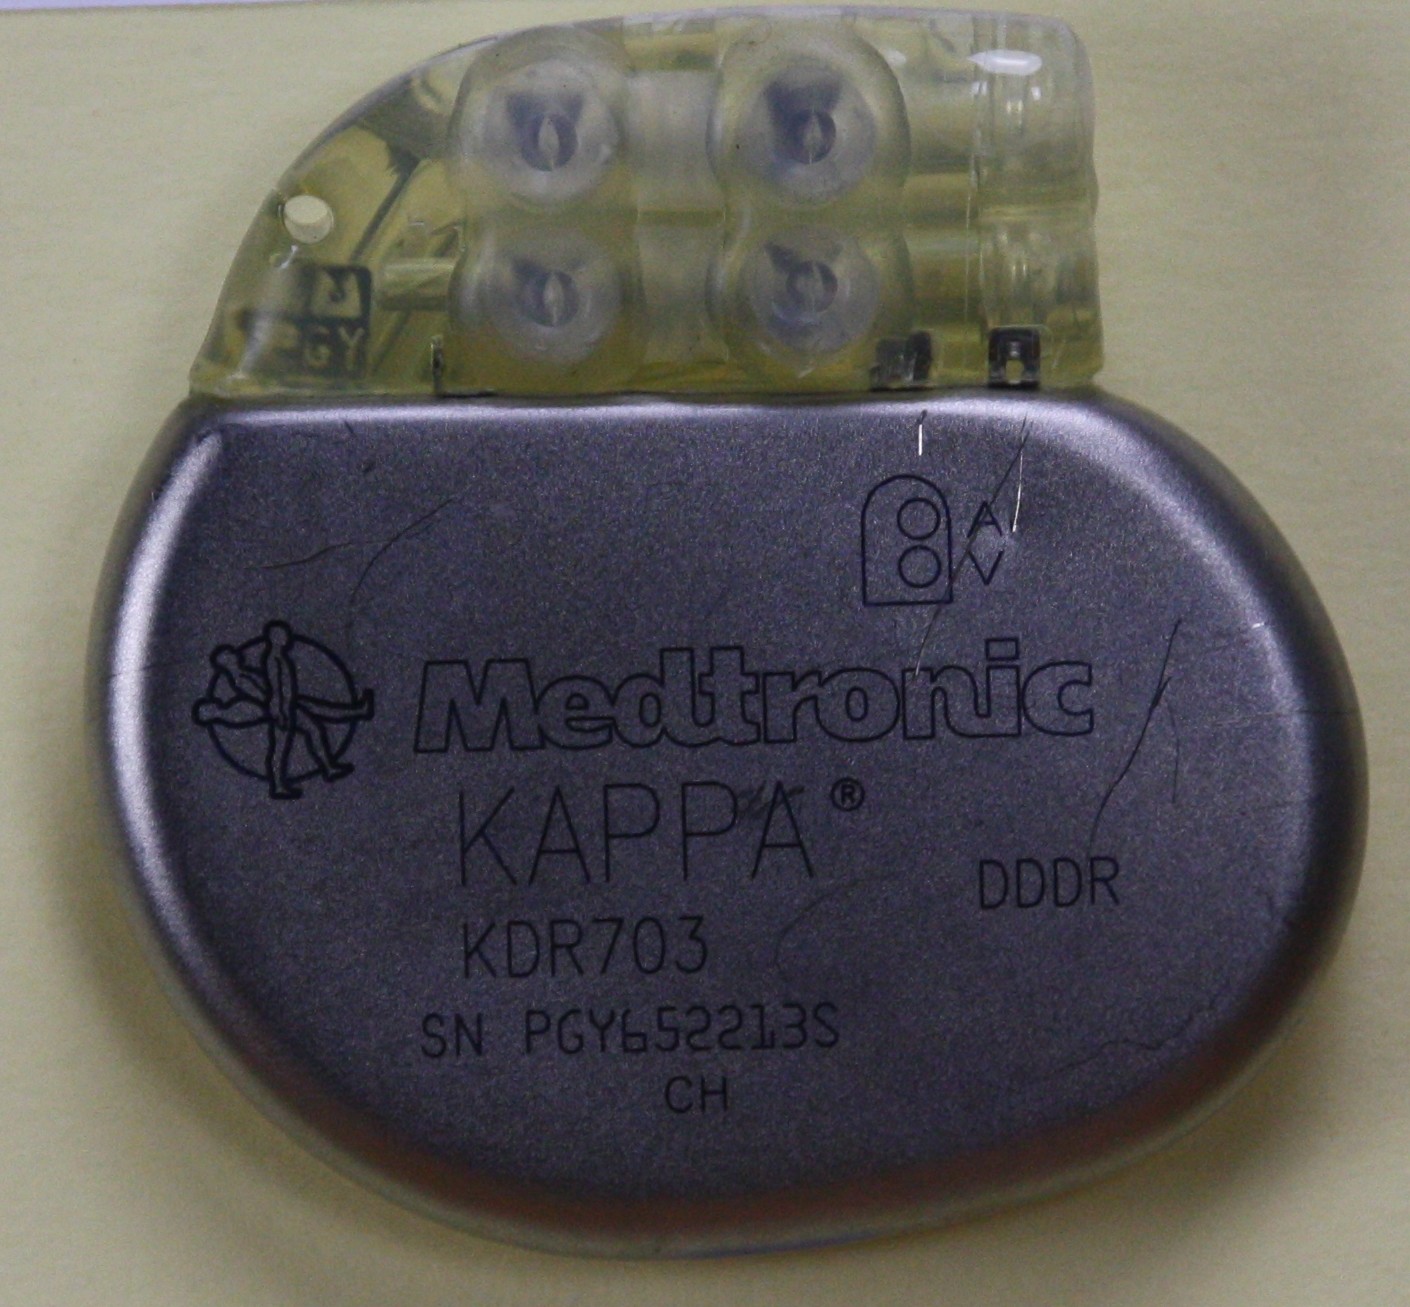 Herzschrittmacher-Implantat Medtronic Kappa KDR703 (Krankenhausmuseum Bielefeld e.V. CC BY-NC-SA)